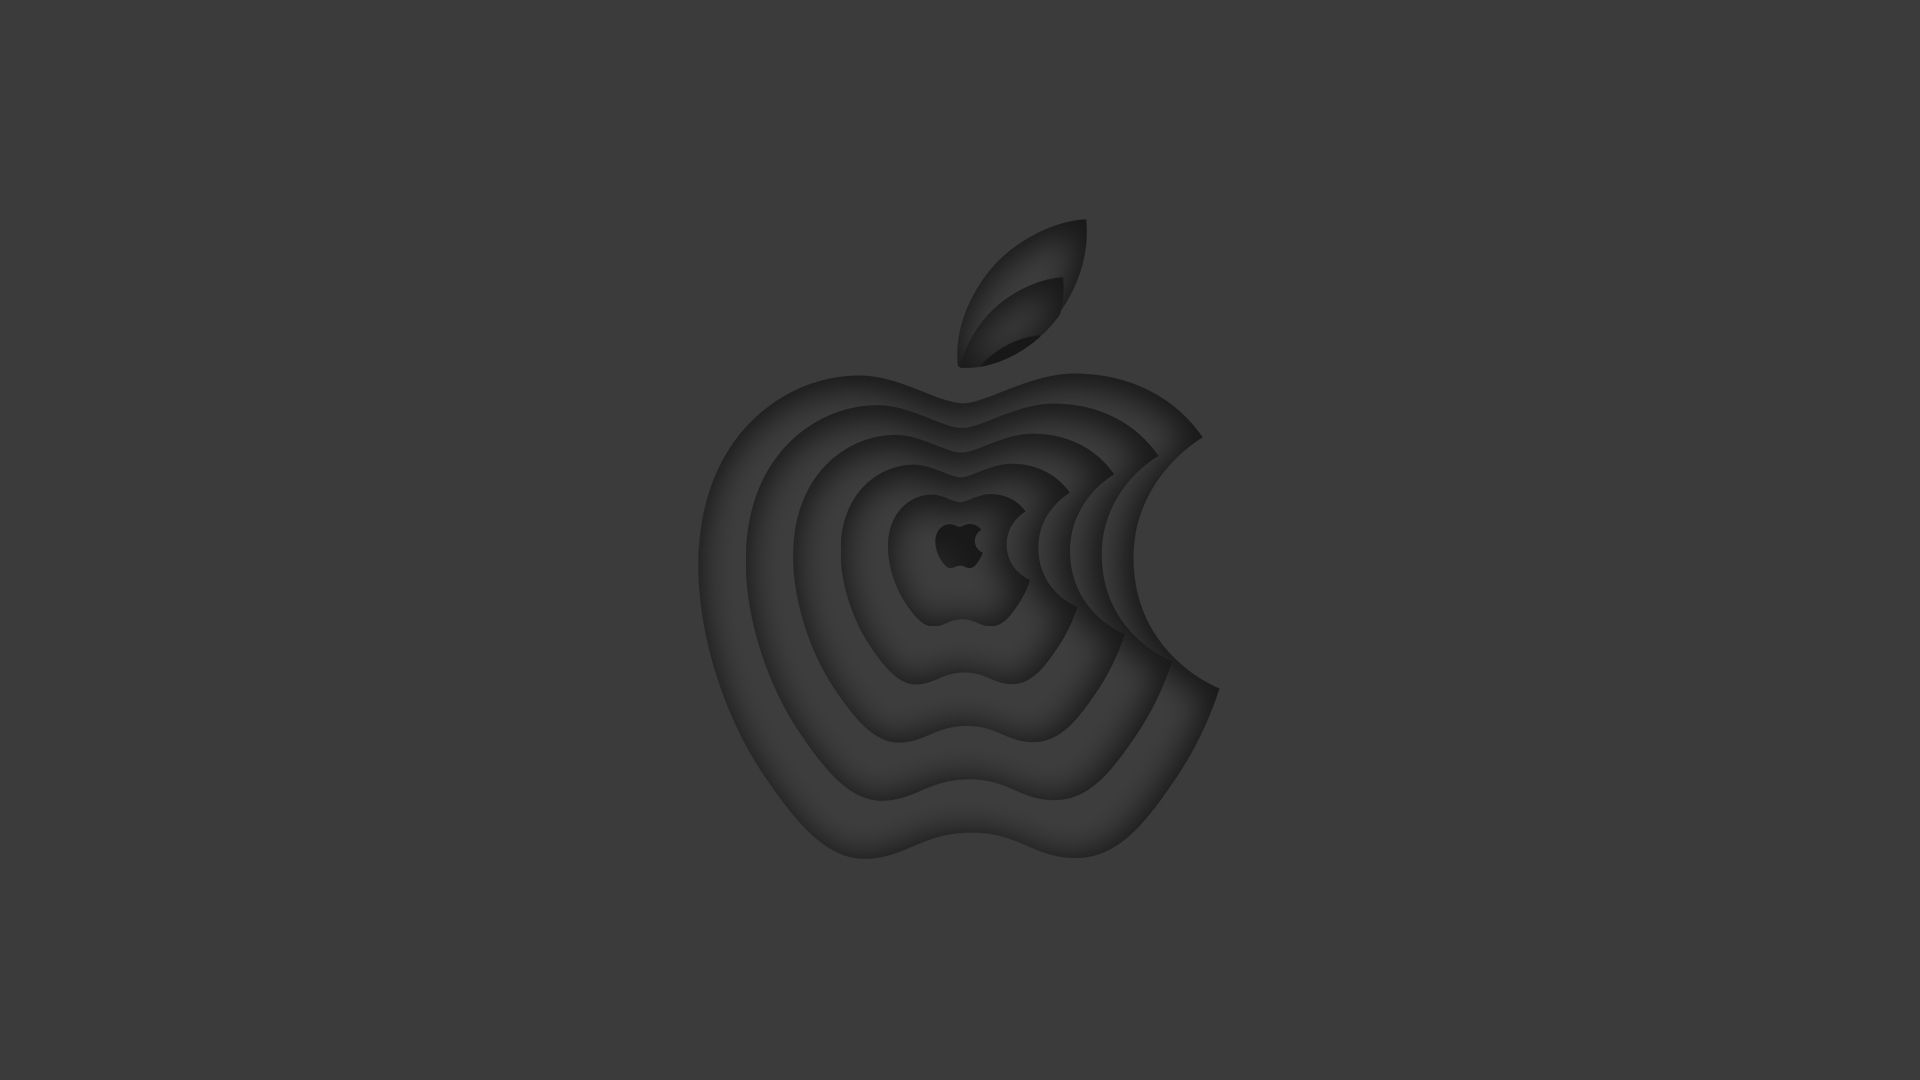 Illustration of a receding Apple logo 